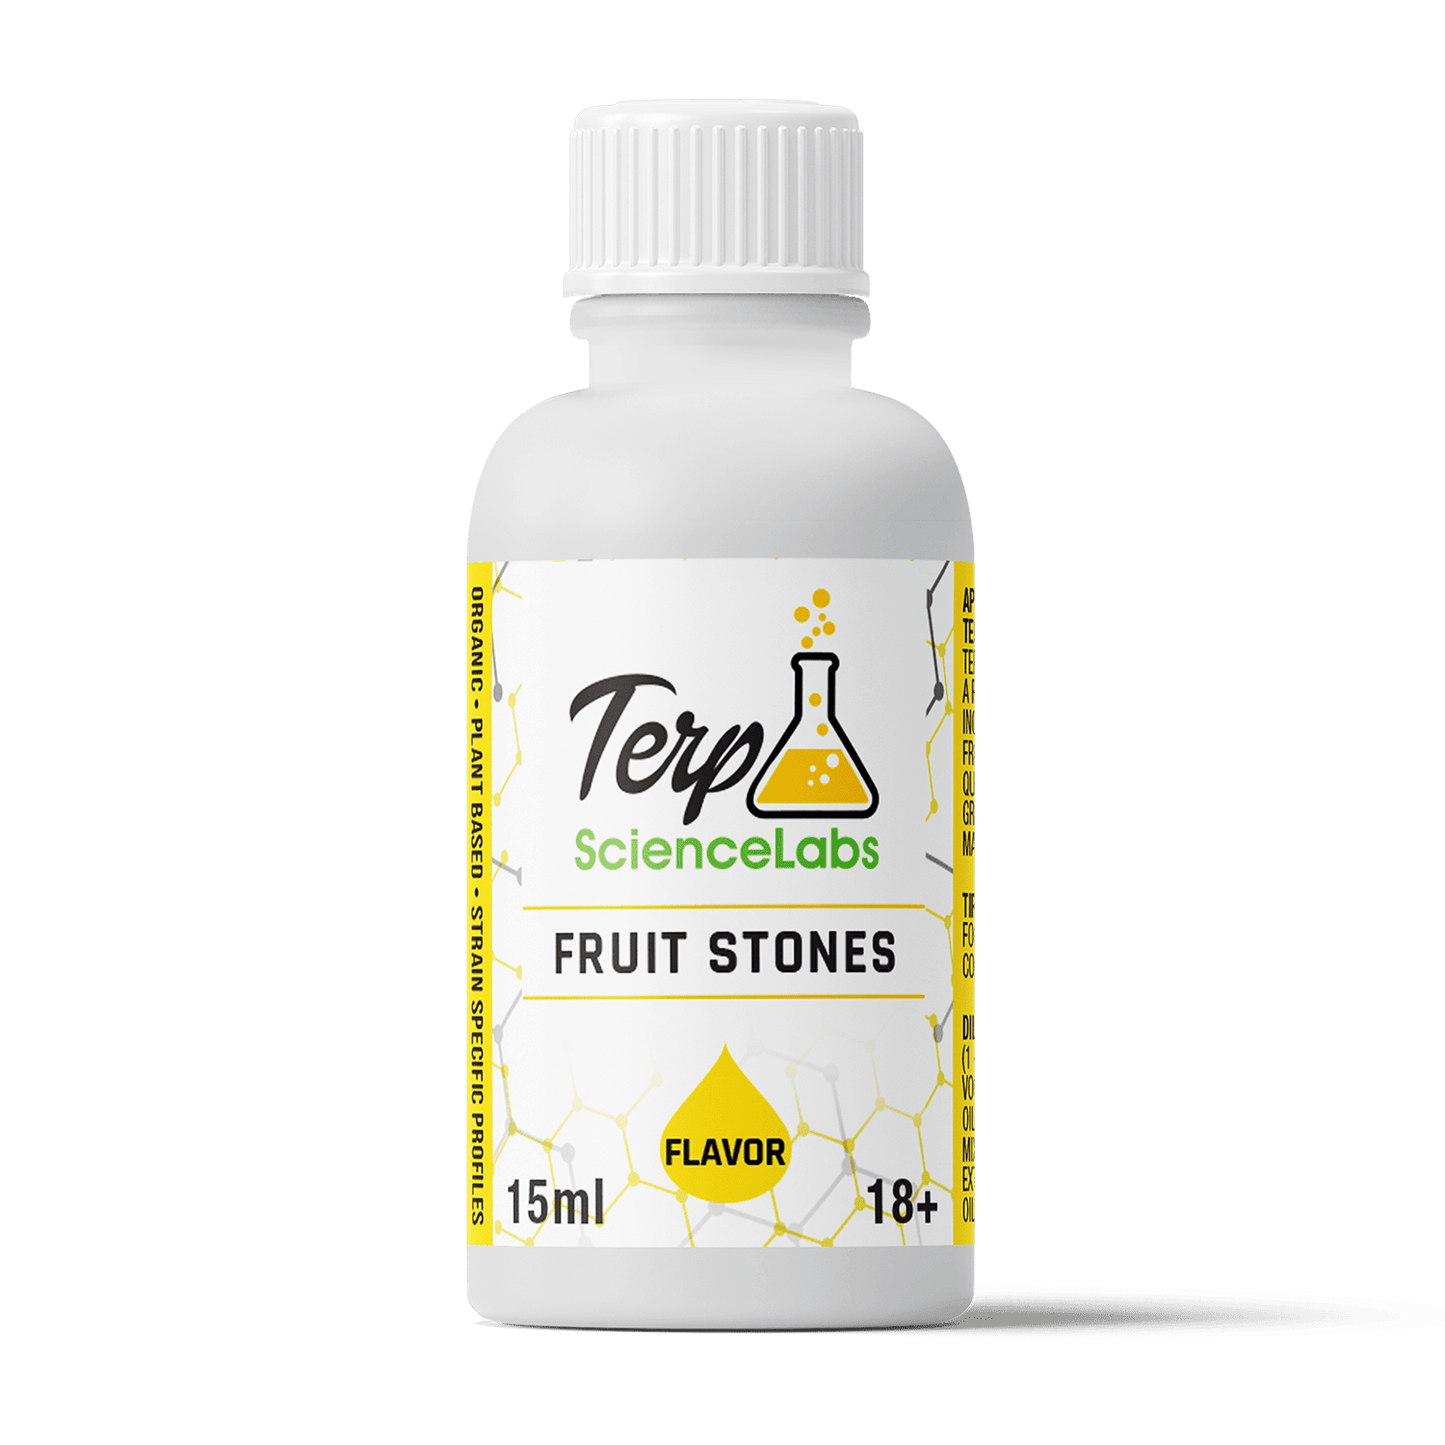 Fruit Stones Flavor Profile